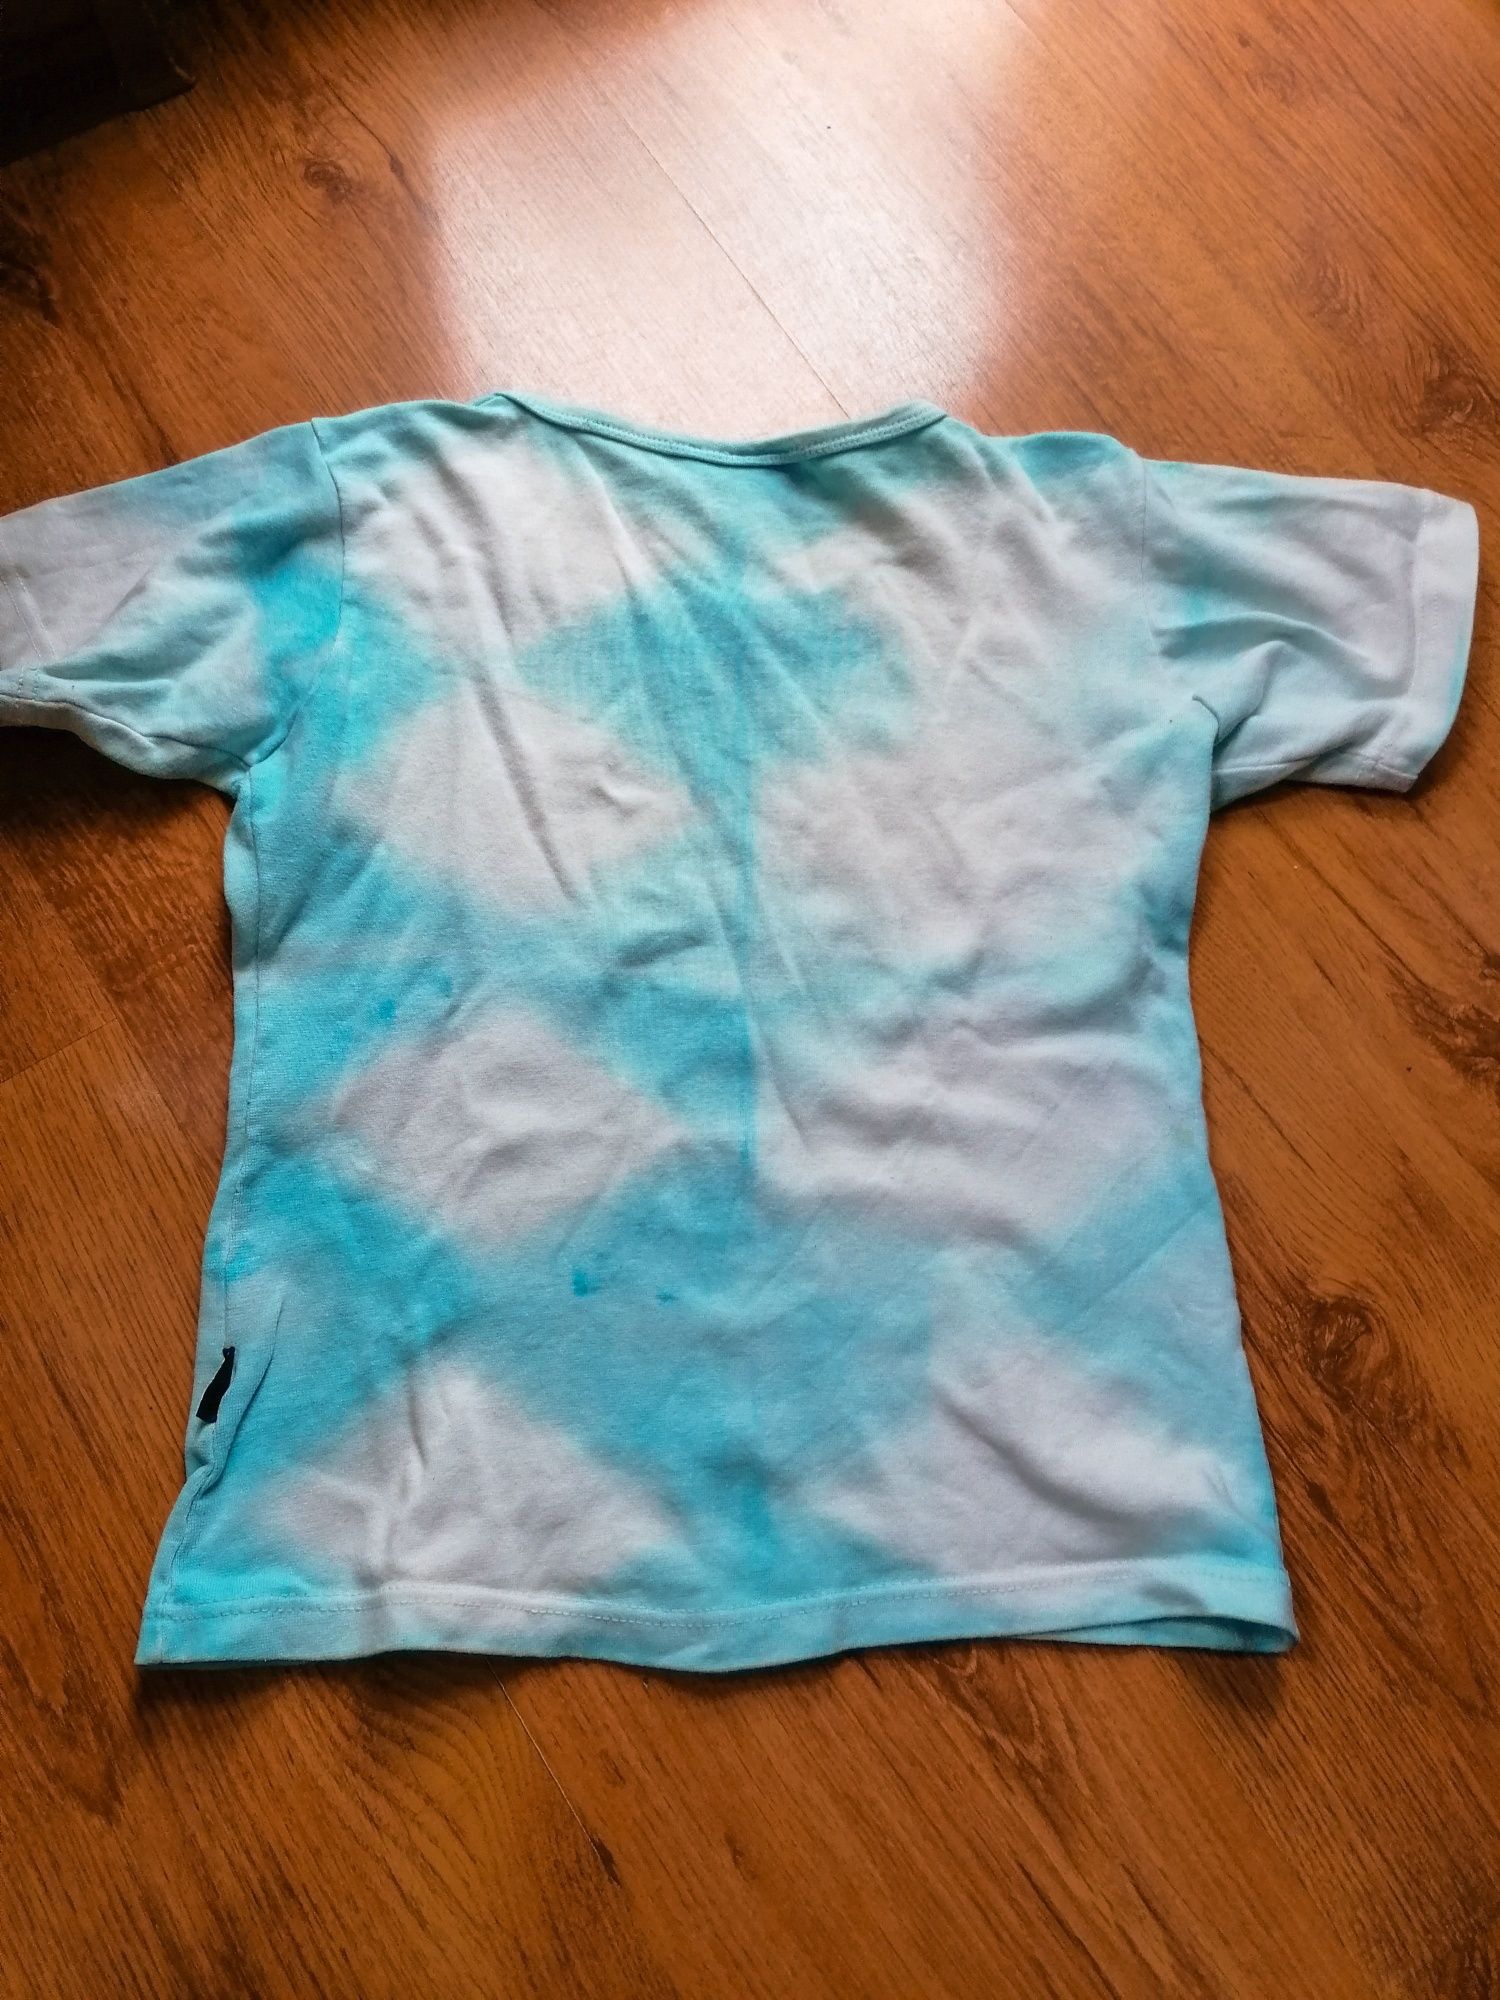 Koszulka bluzka t shirt t-shirt tshirt top tie dye niebieska błękitna